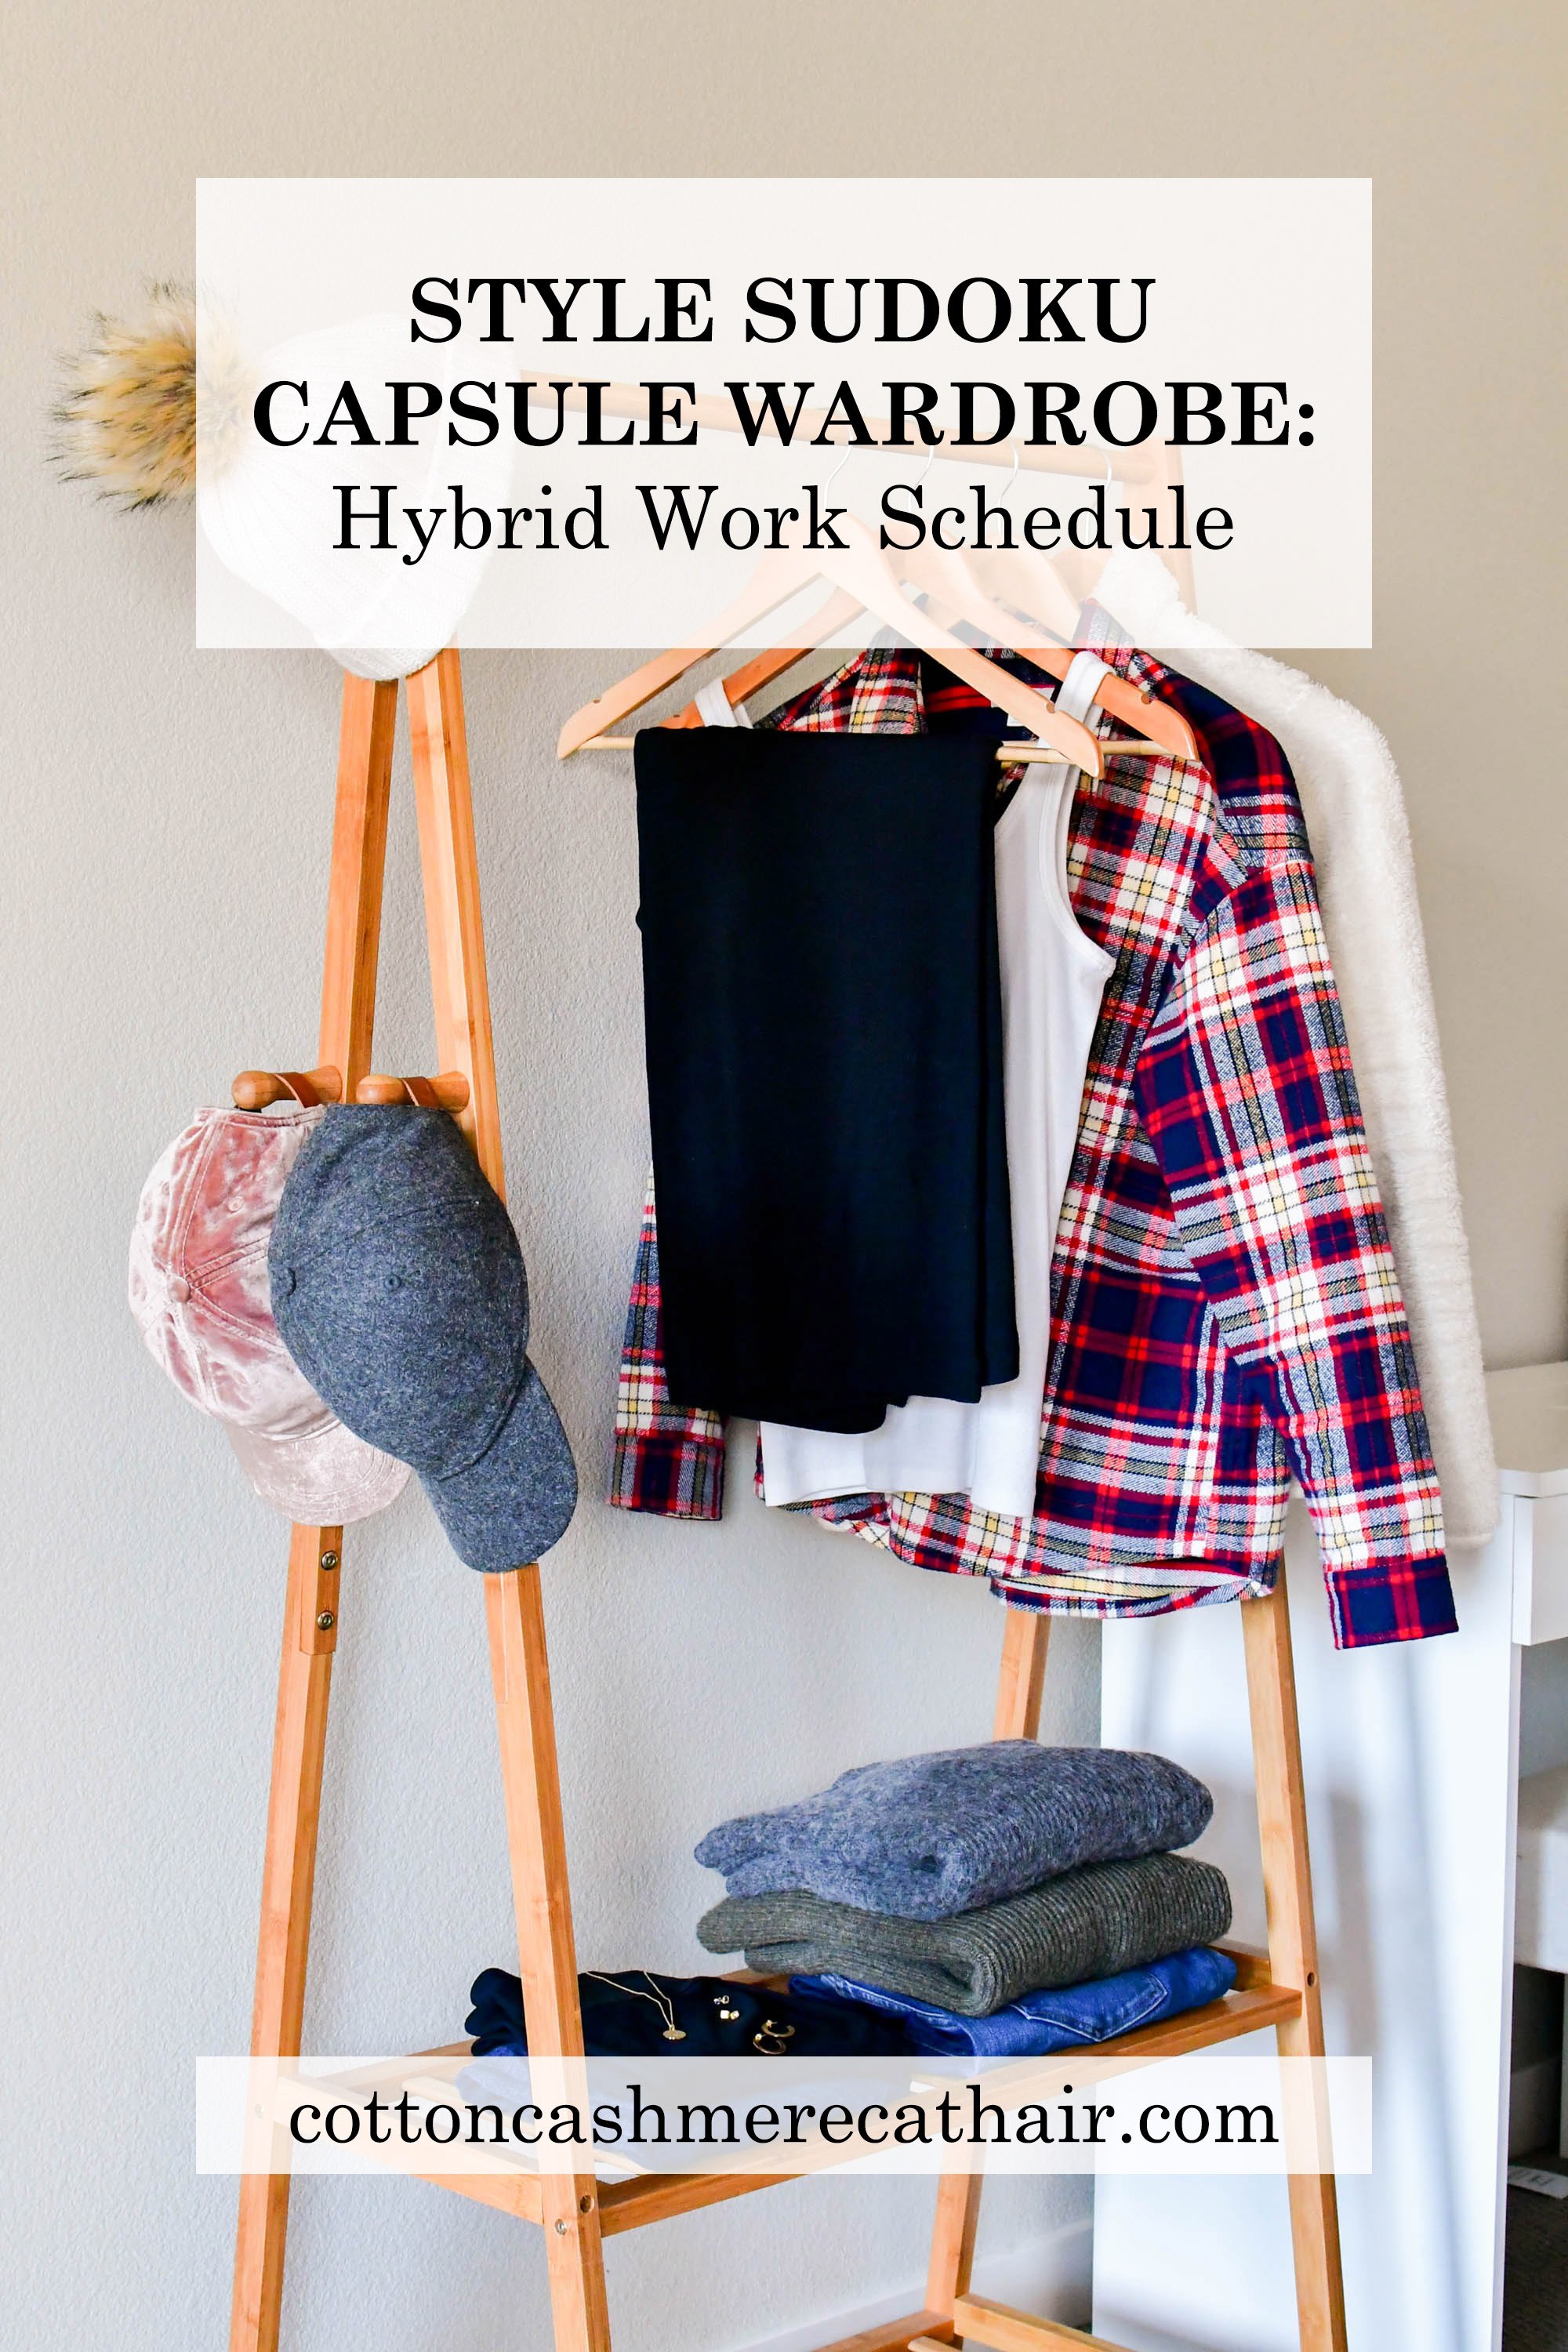 Style Sudoku Capsule Wardrobe: Hybrid Work Schedule